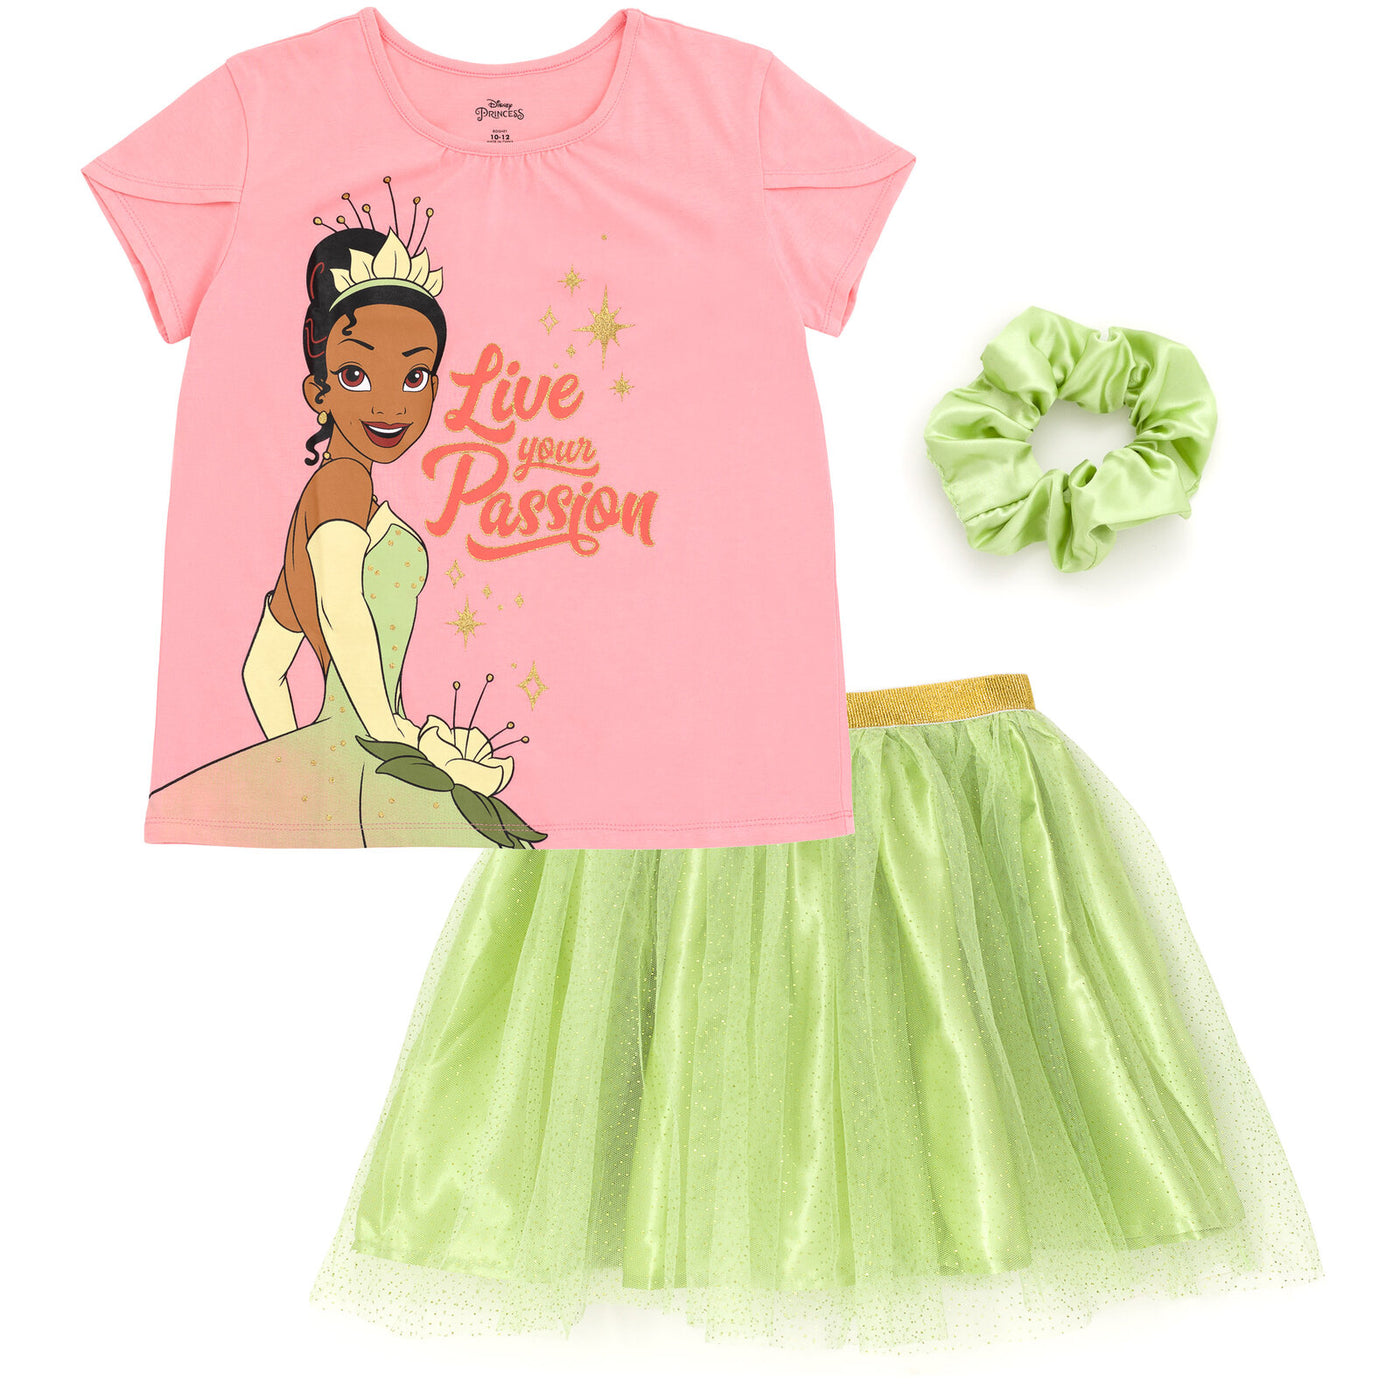 Disney Princess Princess Tiana T-Shirt Tulle Mesh Skirt and Scrunchie 3 Piece Outfit Set